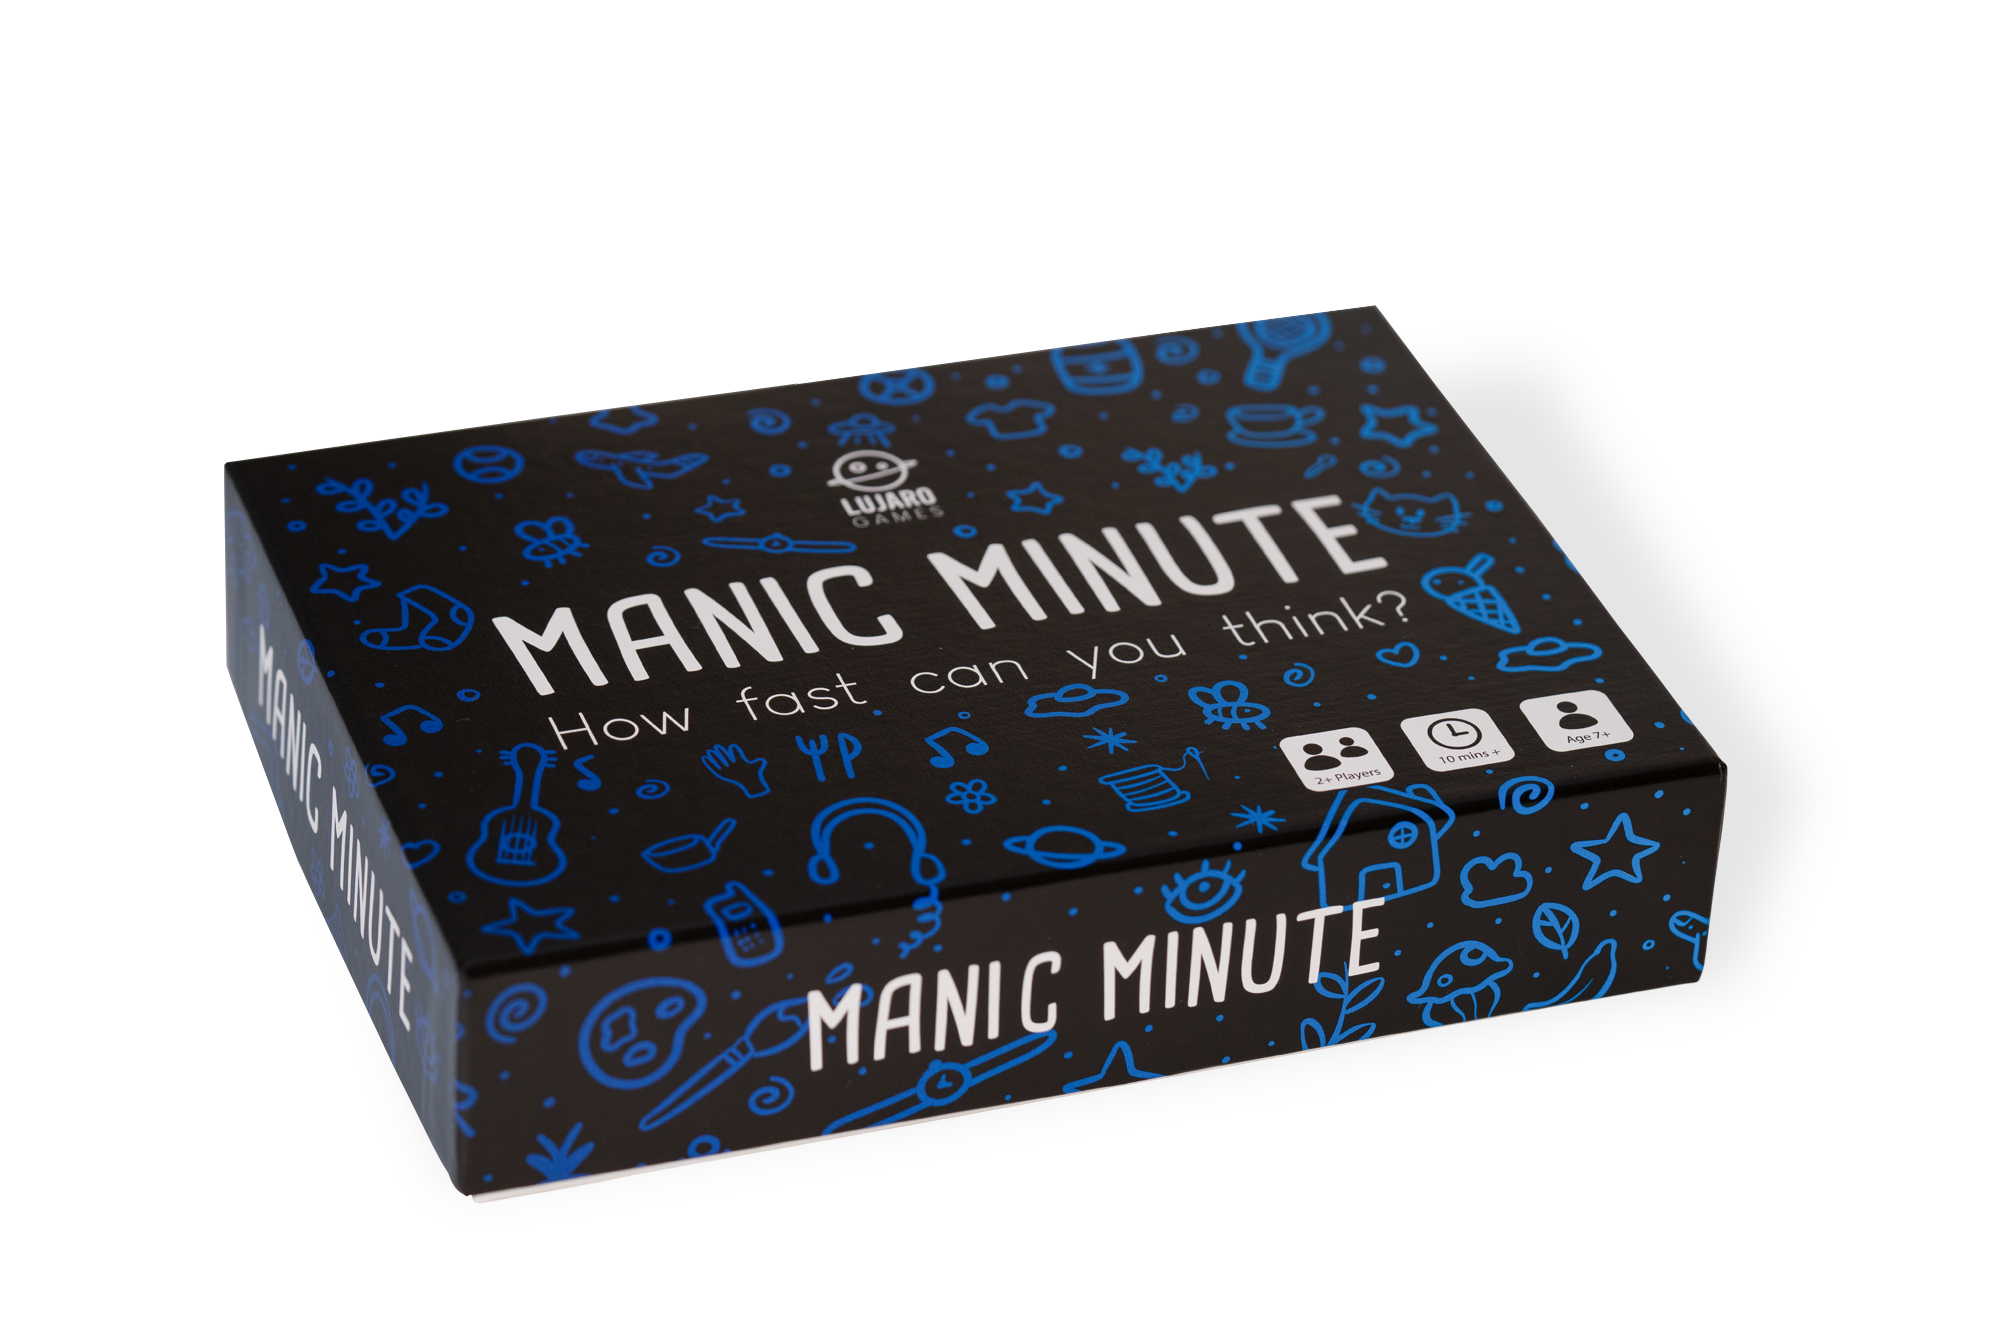 Manic Minute Original Edition box